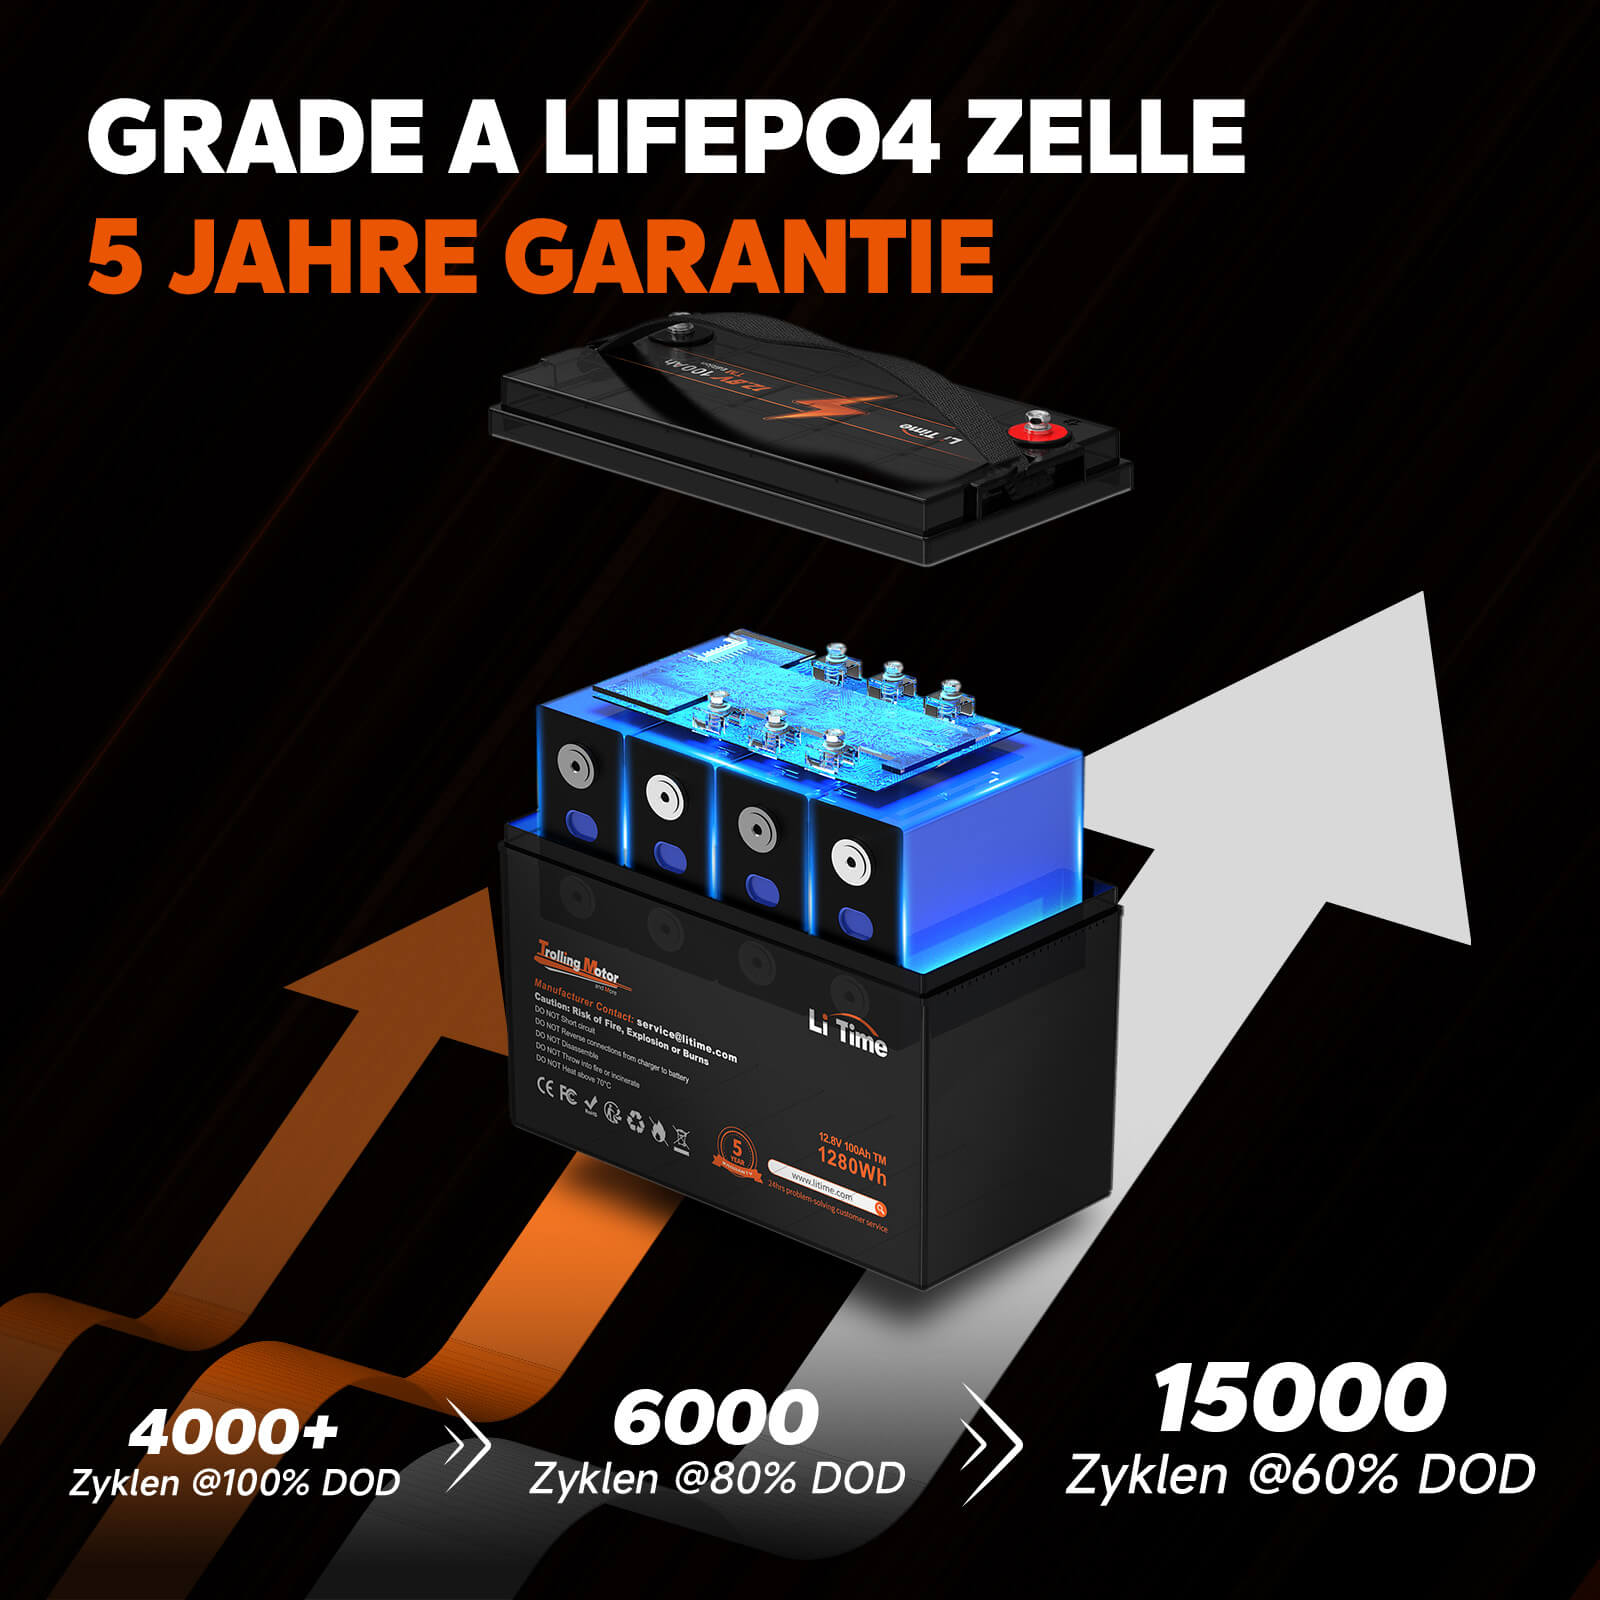 🔥Endpreis: €243.69🔥【0% MwSt.】LiTime 12V 100Ah TM LiFePO4 Batterie, Tieftemperaturschutz für Trollingmotor